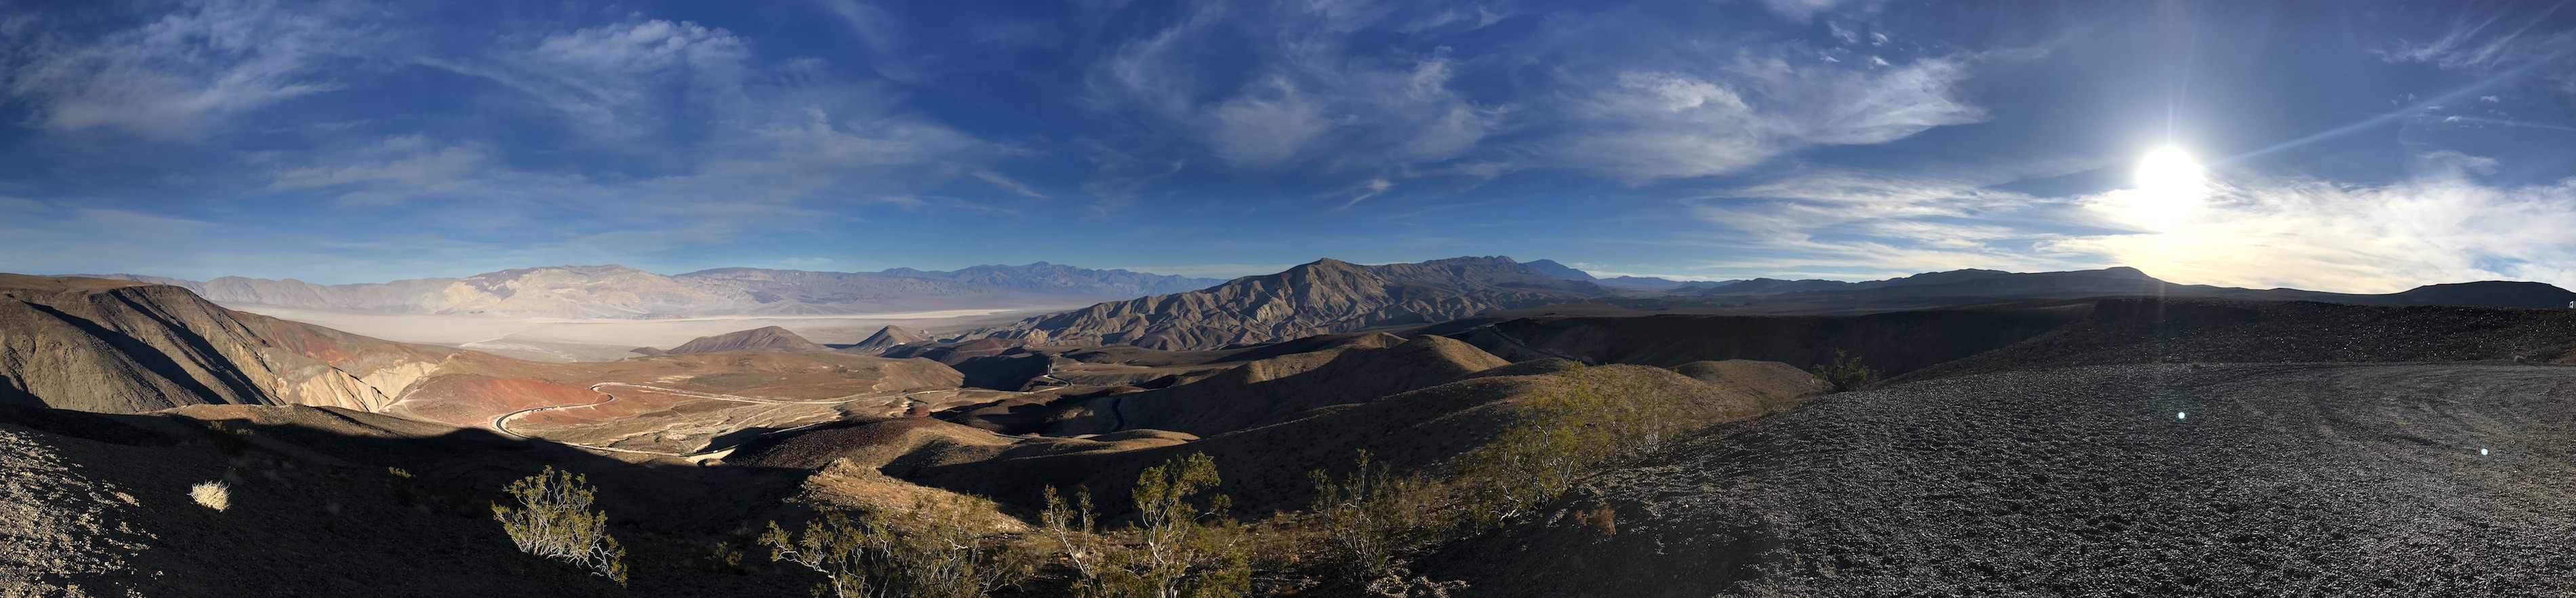 Overlook Paramint Valley, Death Valley